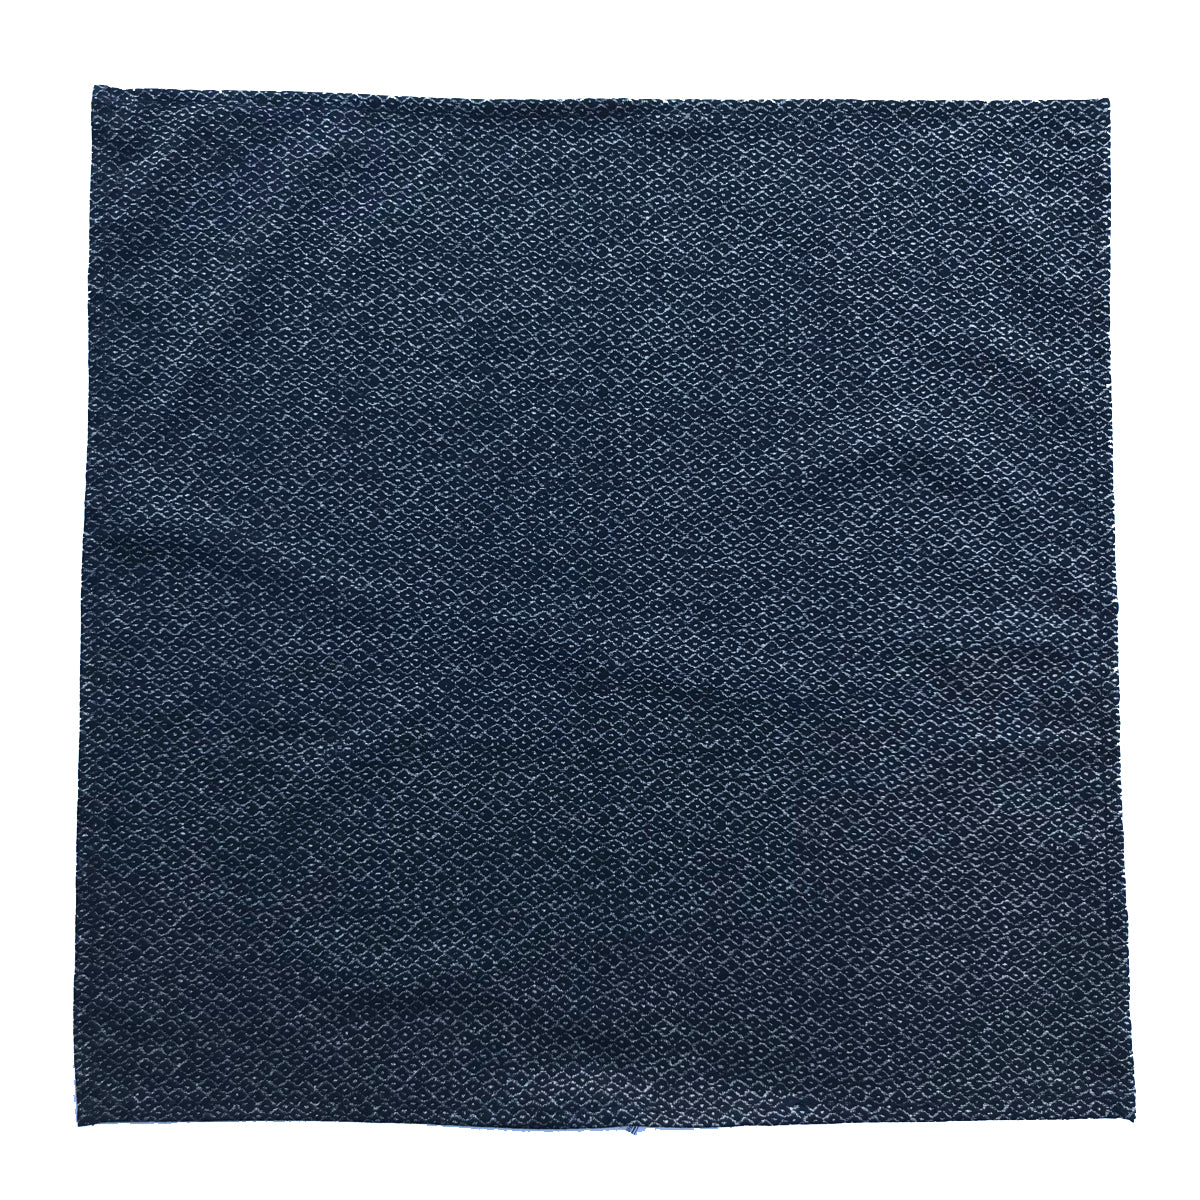 Japanese Nara Cotton Canvas Indigo Handkerchief 27.5 x 27.5 "TREL"